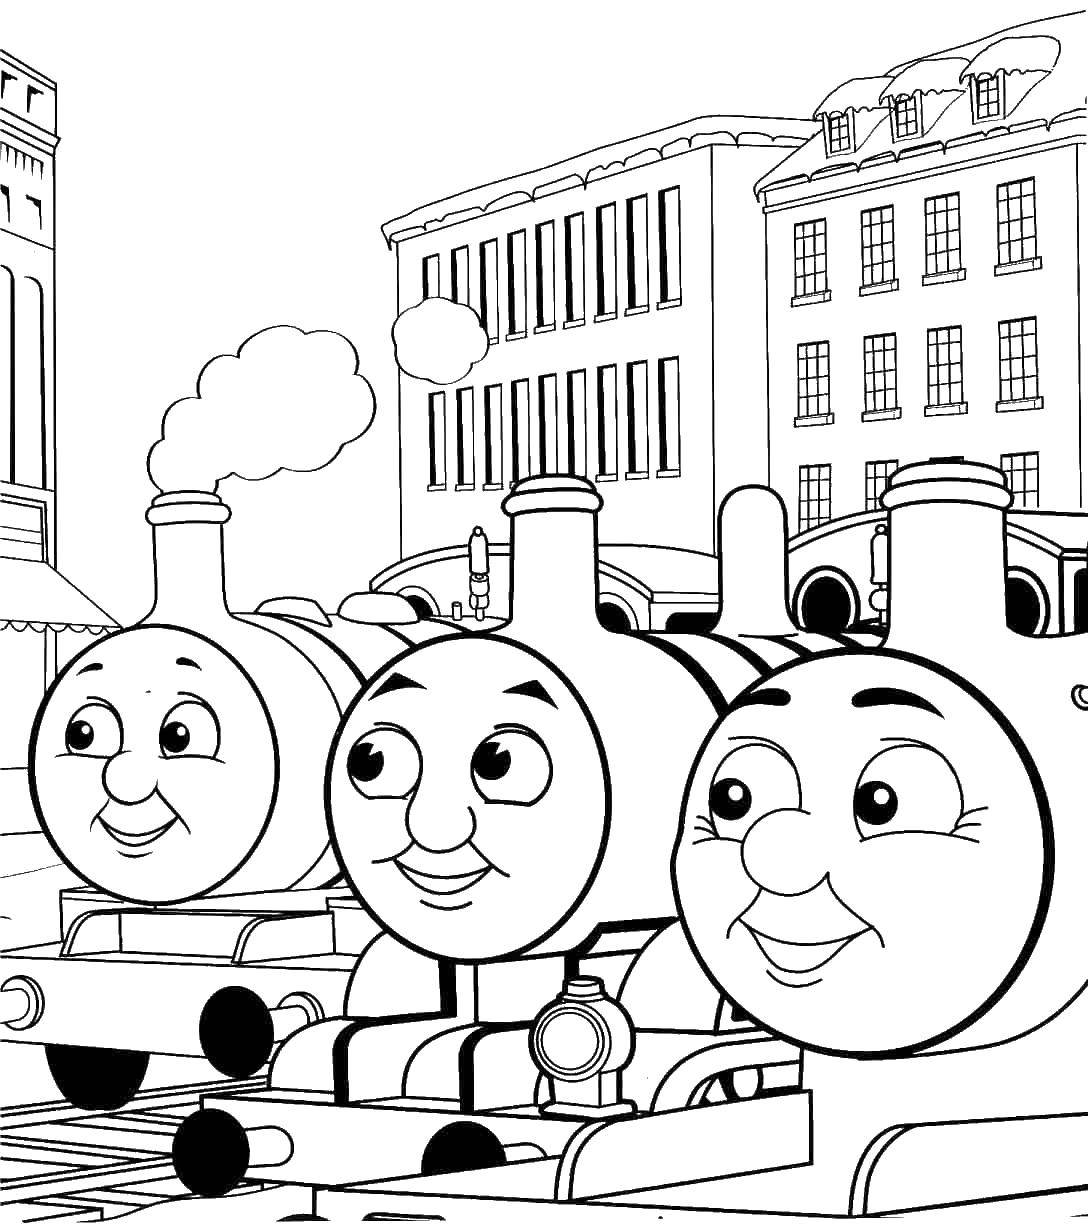 Coloring Cartoon Thomas the tank engine. Category train. Tags:  Cartoon character.